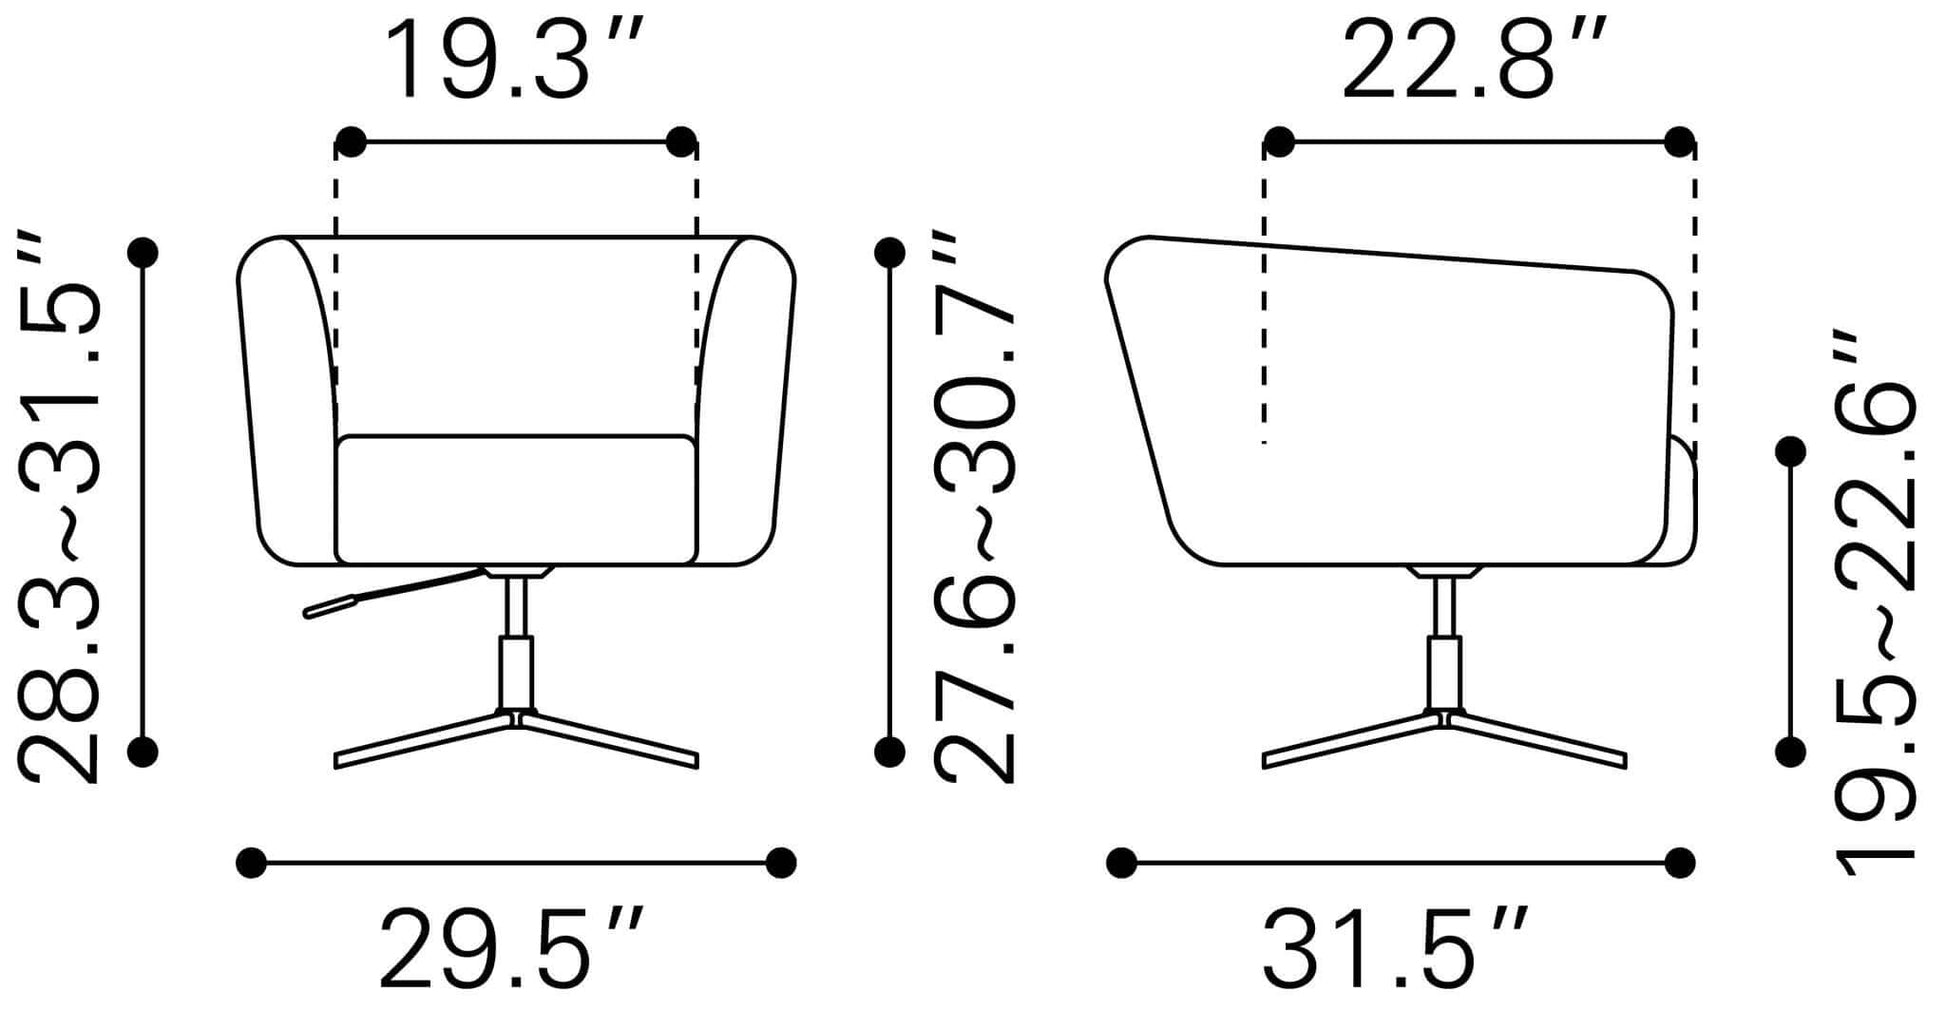 Elia Adjustable Lounge Accent Swivel Chair in Pink Velvet - Revel Sofa 